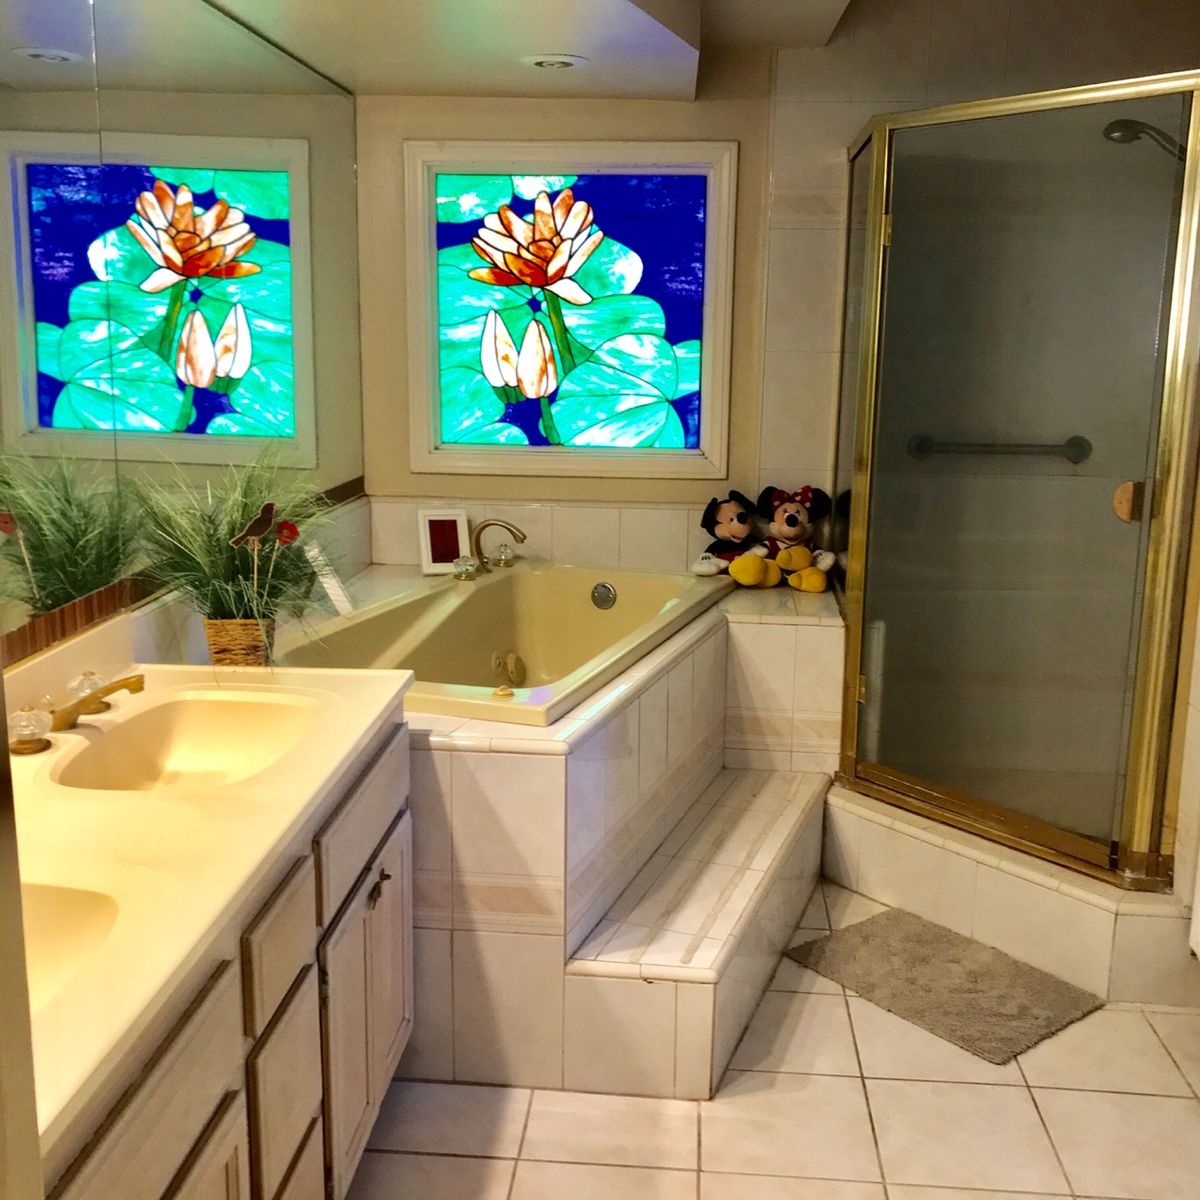 Senior enjoying modern amenities in a well-designed bathroom at Happy Home Care For Elderly.